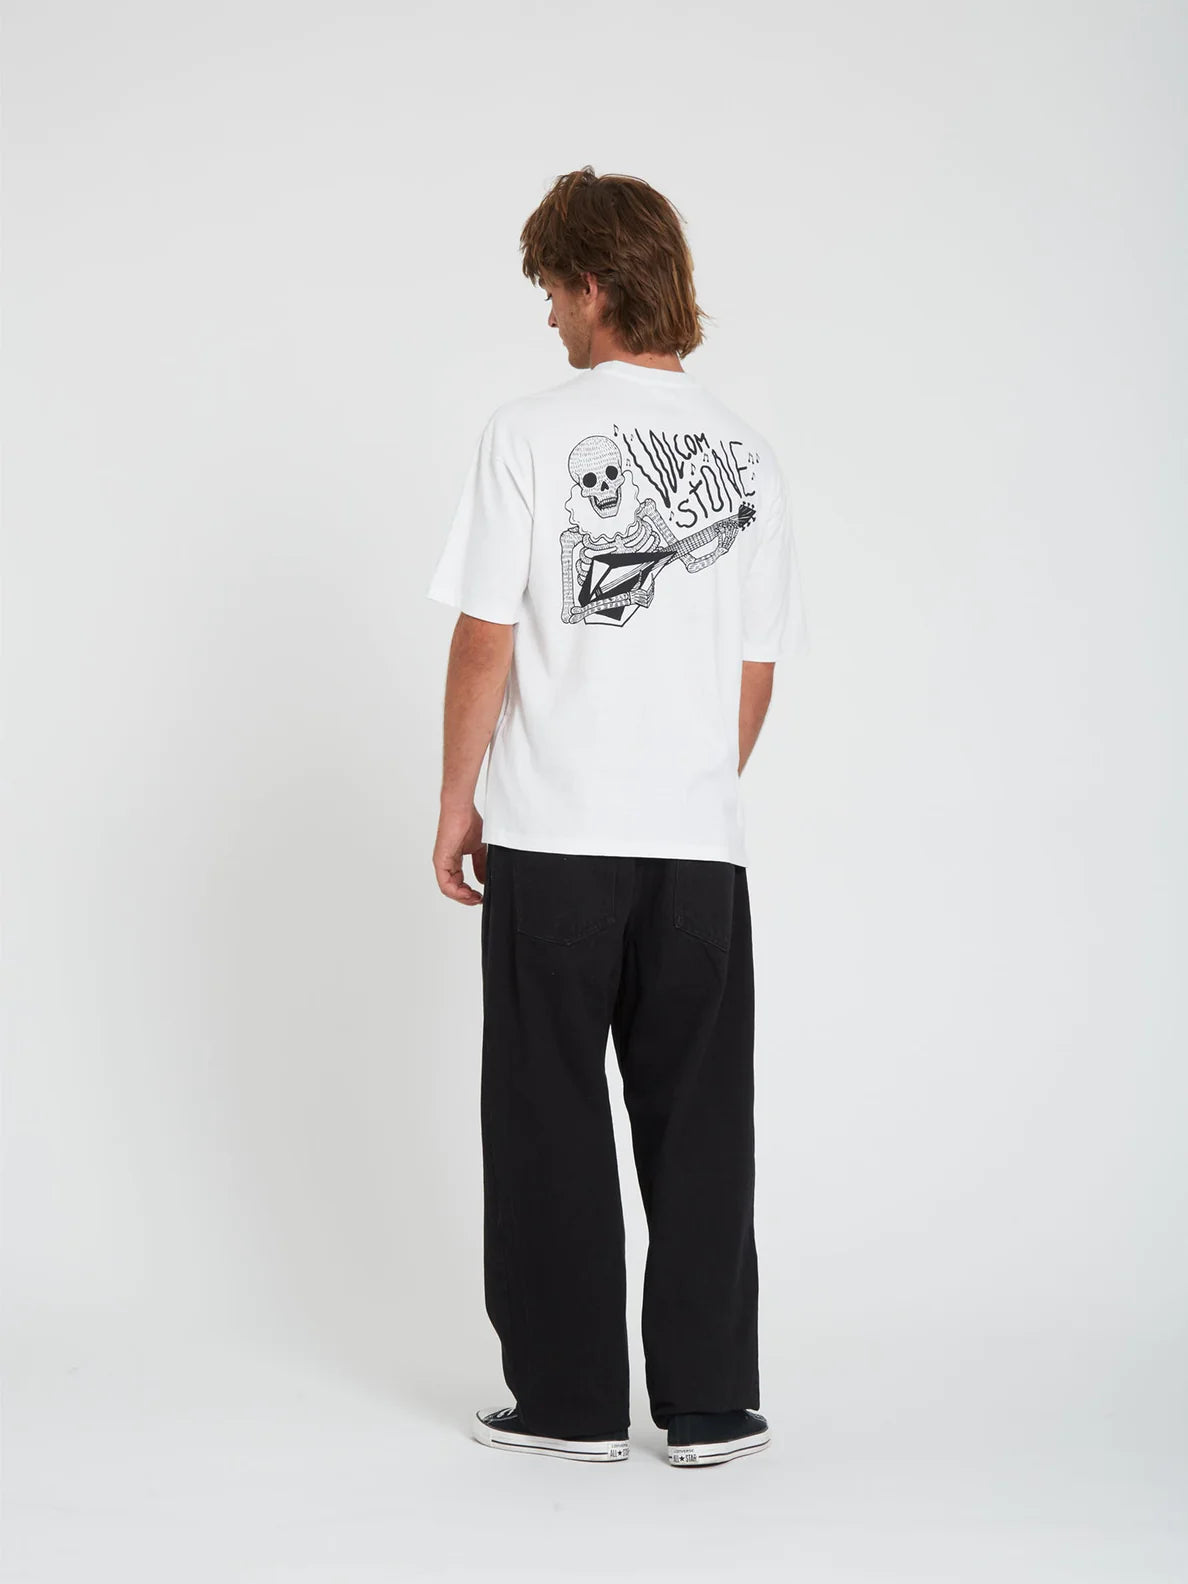 Volcom Shredead Weißes T-Shirt | Meistverkaufte Produkte | Neue Produkte | Neueste Produkte | surfdevils.com